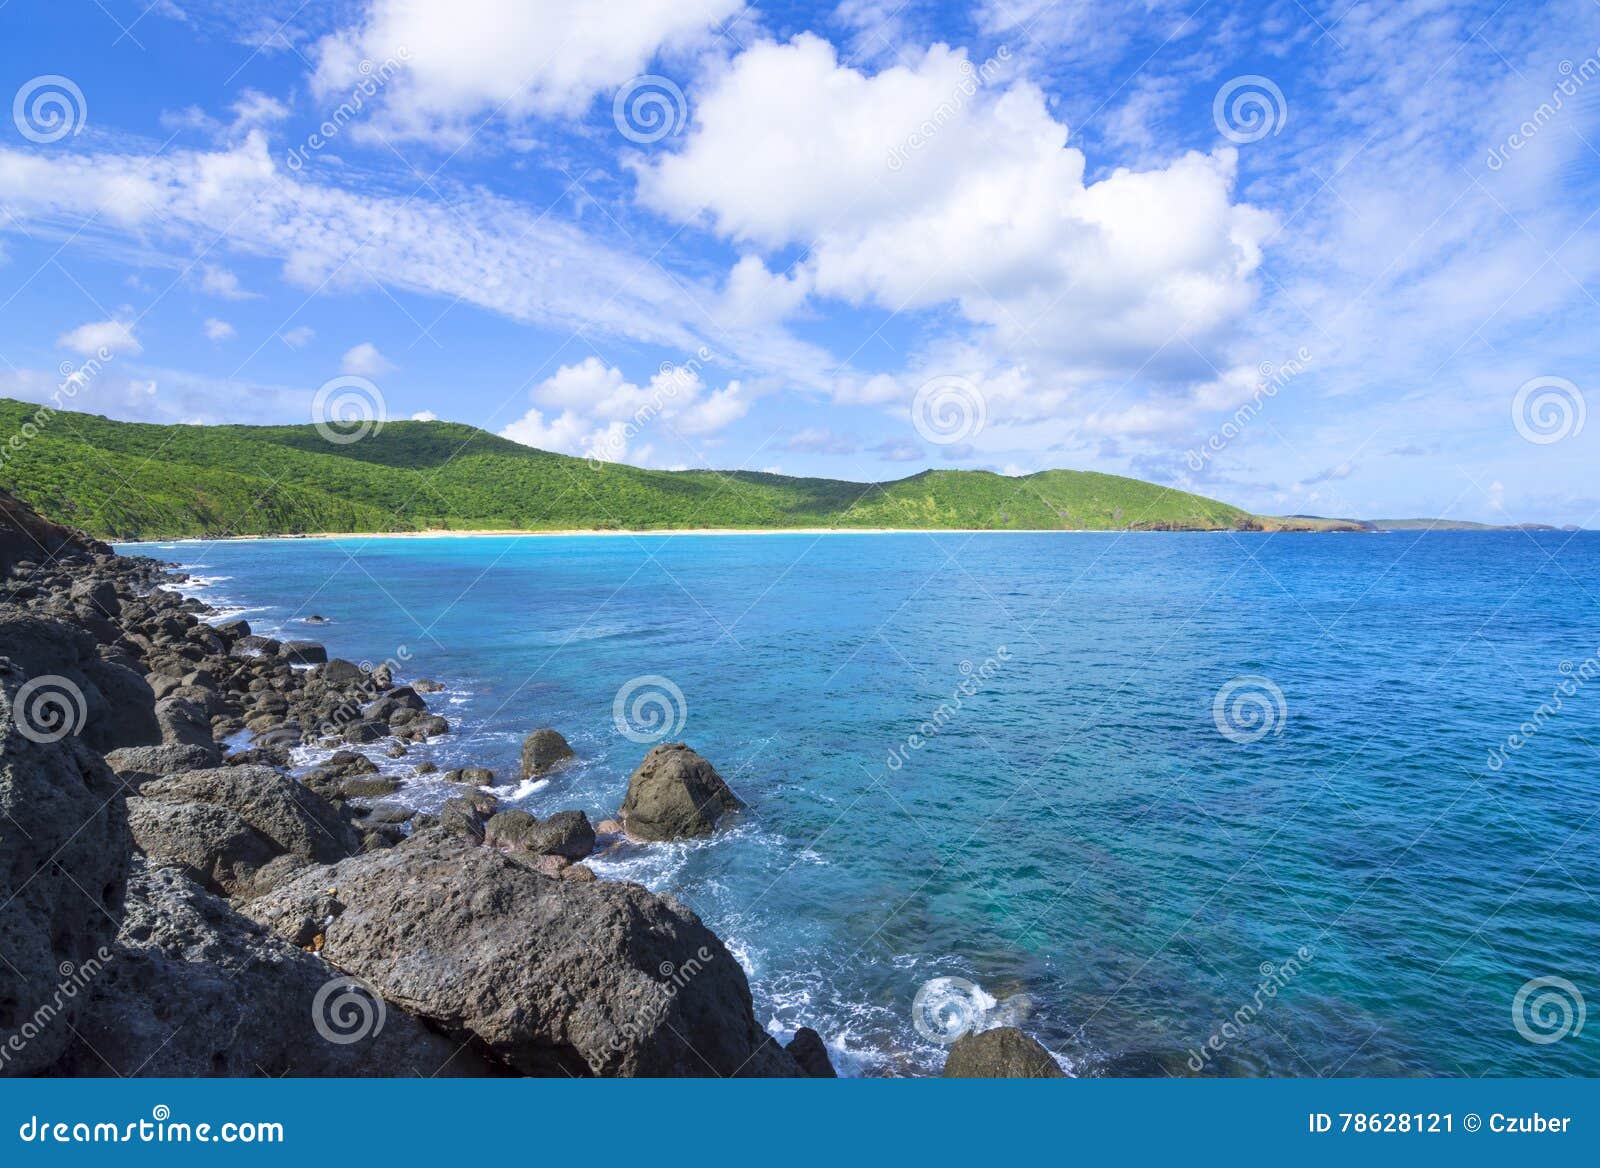 rugged caribbean coastline and rolling green hills